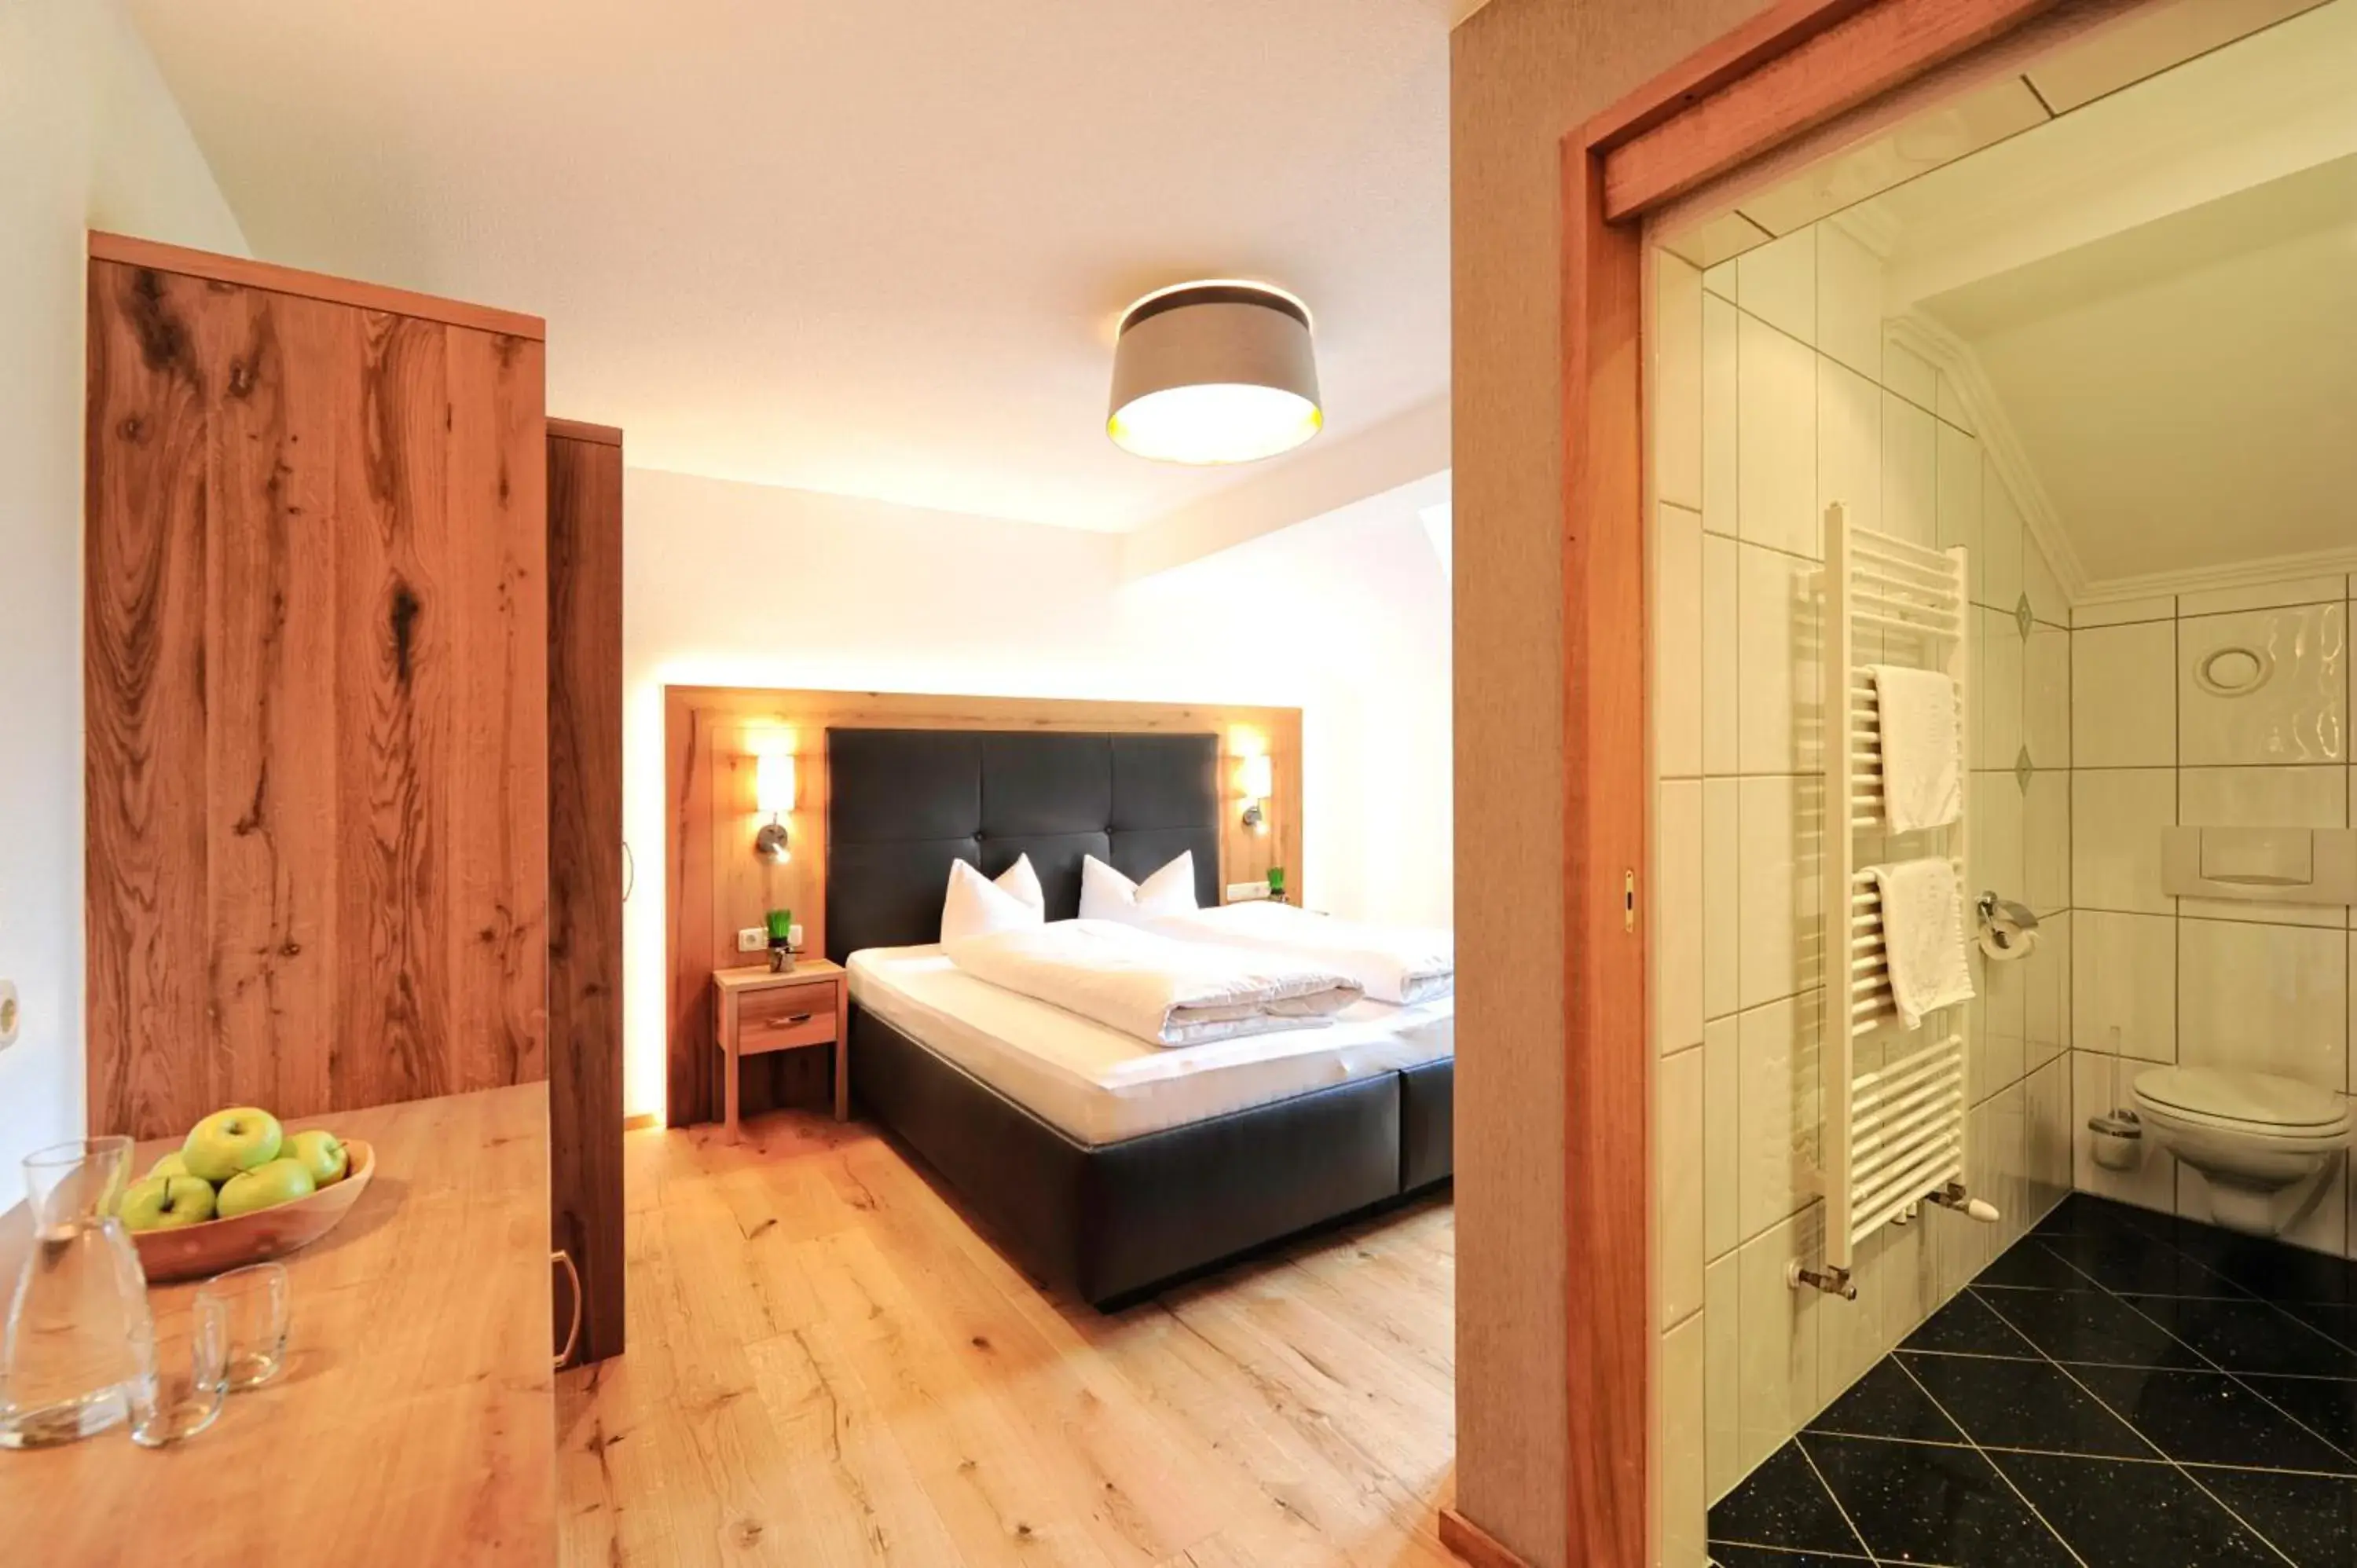 Bedroom, Room Photo in Hotel Verwall